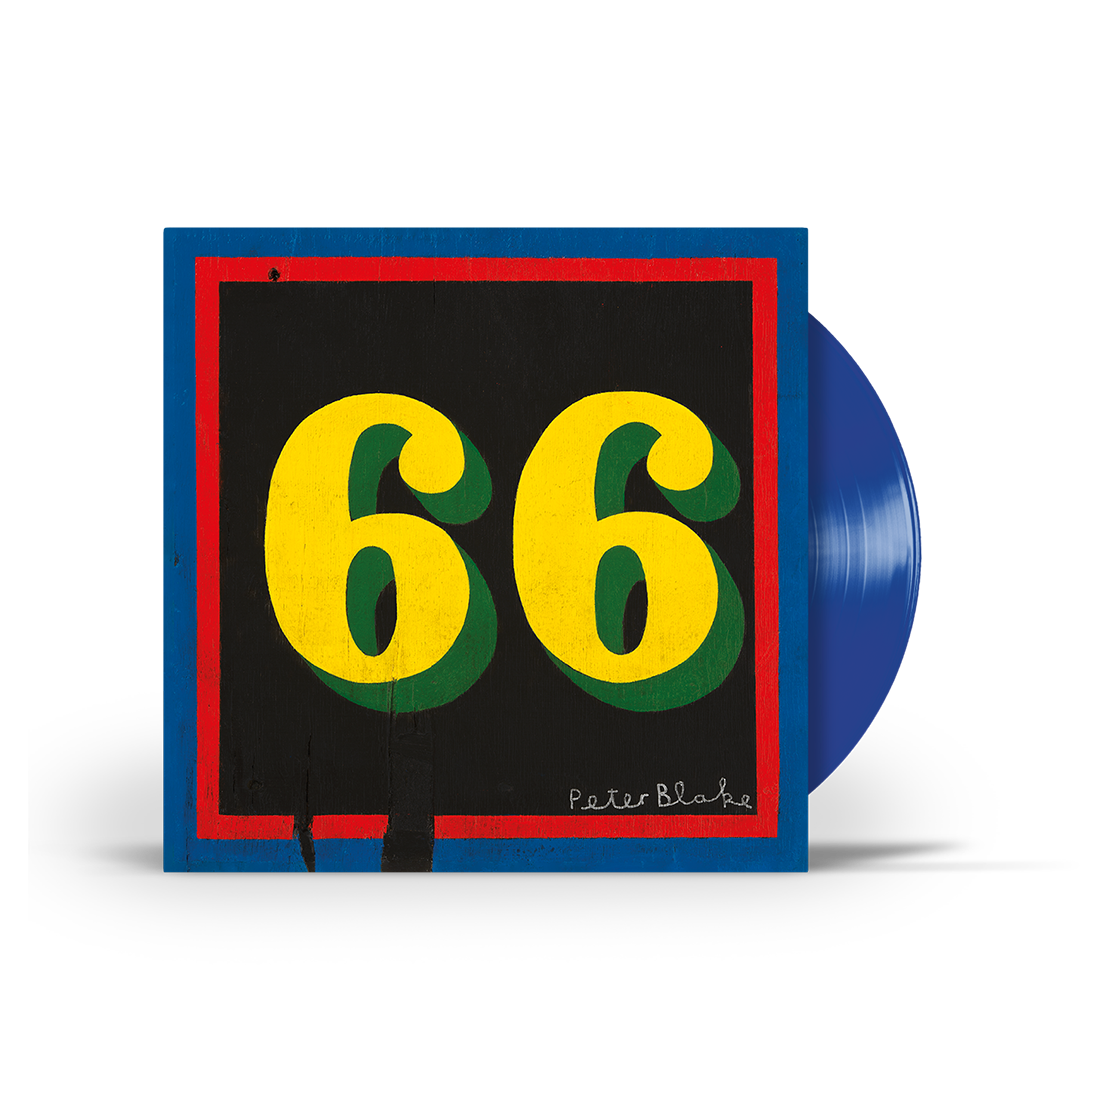 Paul Weller - 66: Limited Blue Vinyl LP